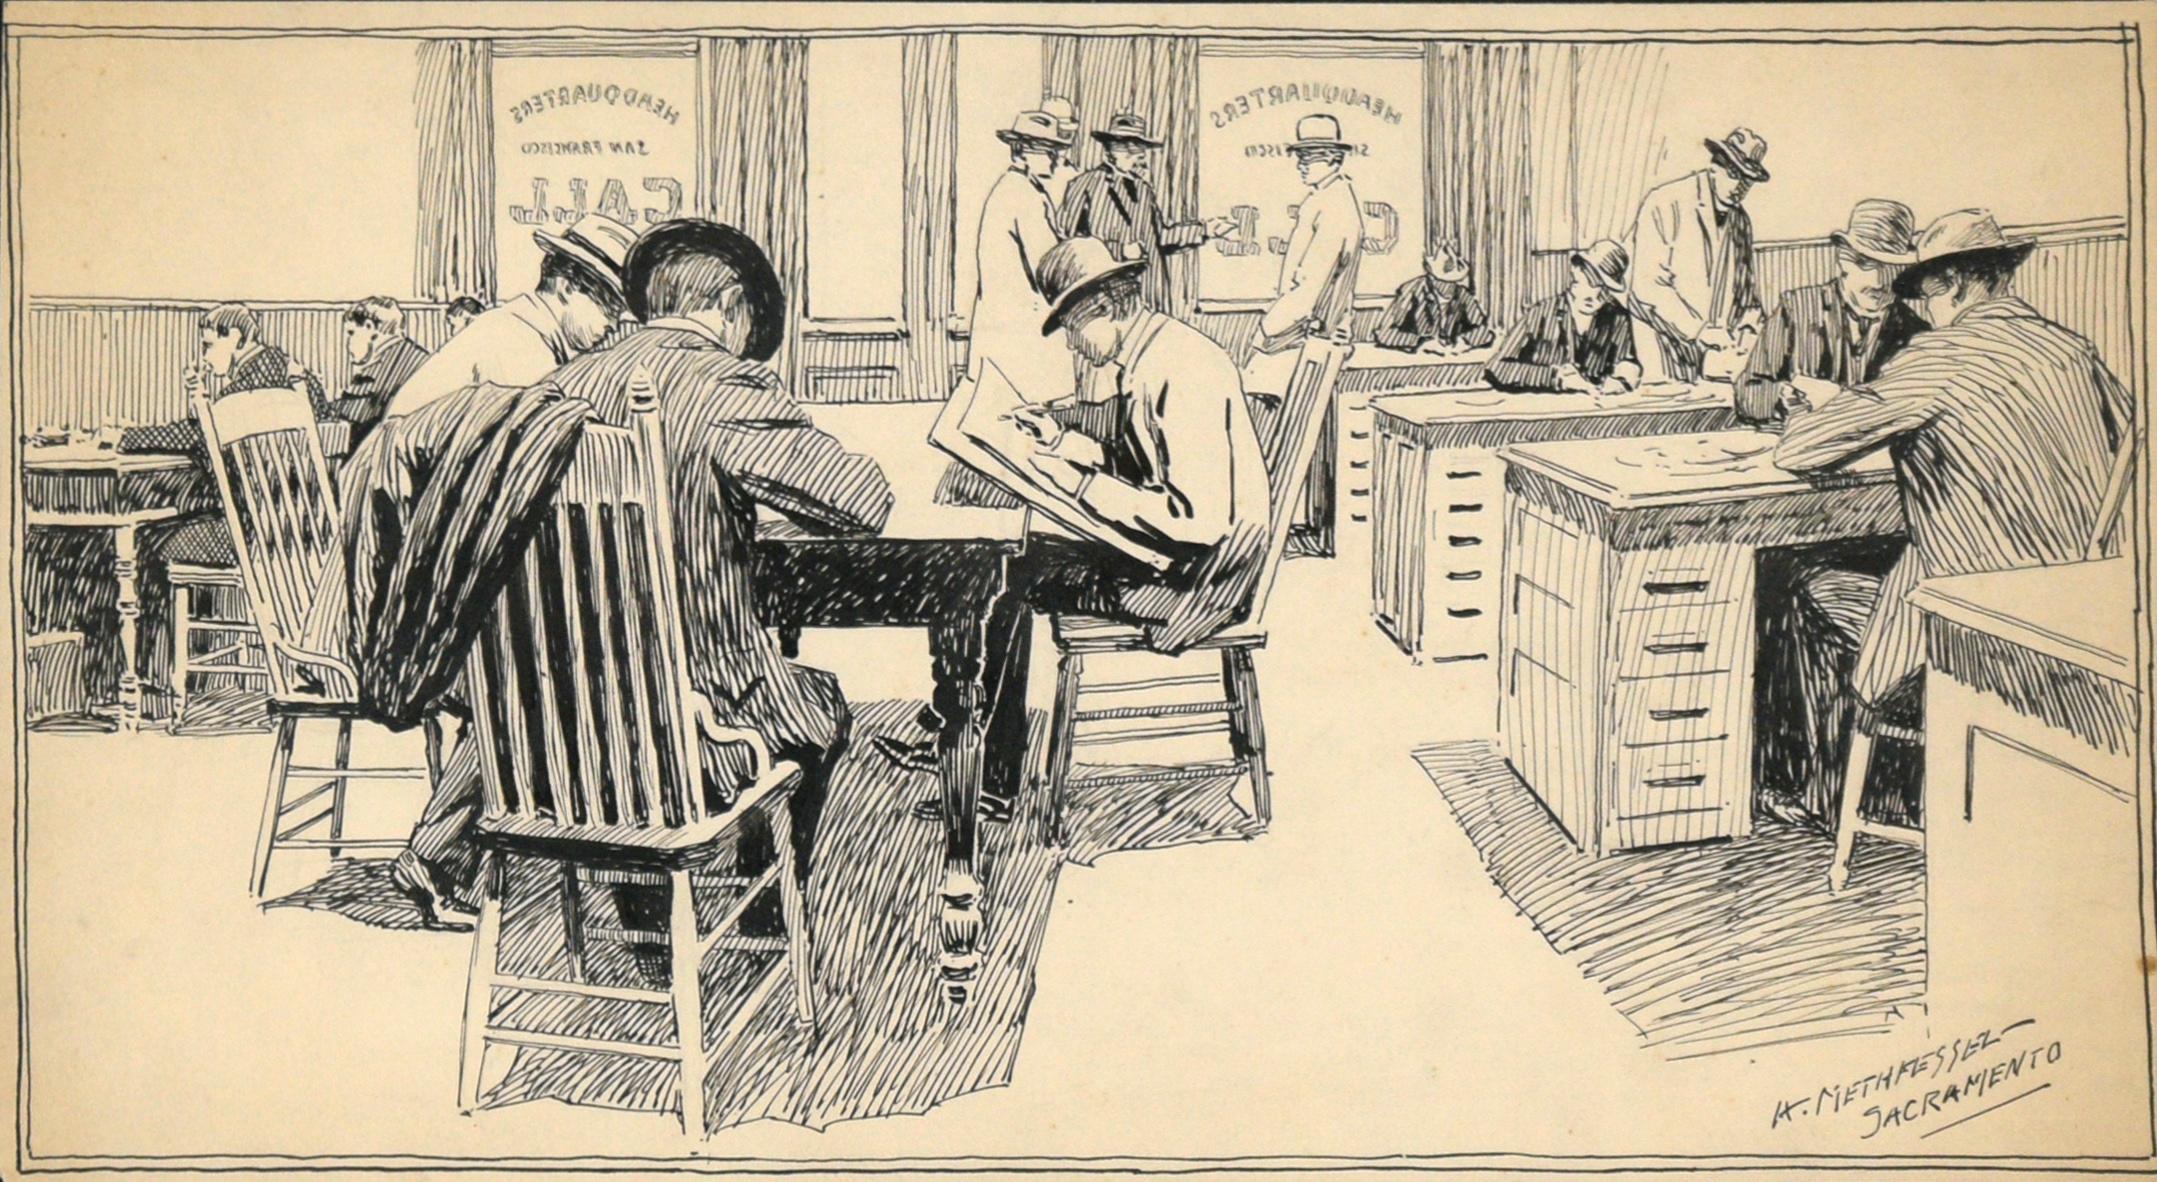 The Illustrator's Workroom at The San Francisco Call (L'atelier d'illustrateur au San Francisco Call), fin du 19e siècle Illustration - Art de Adolph Methfessel